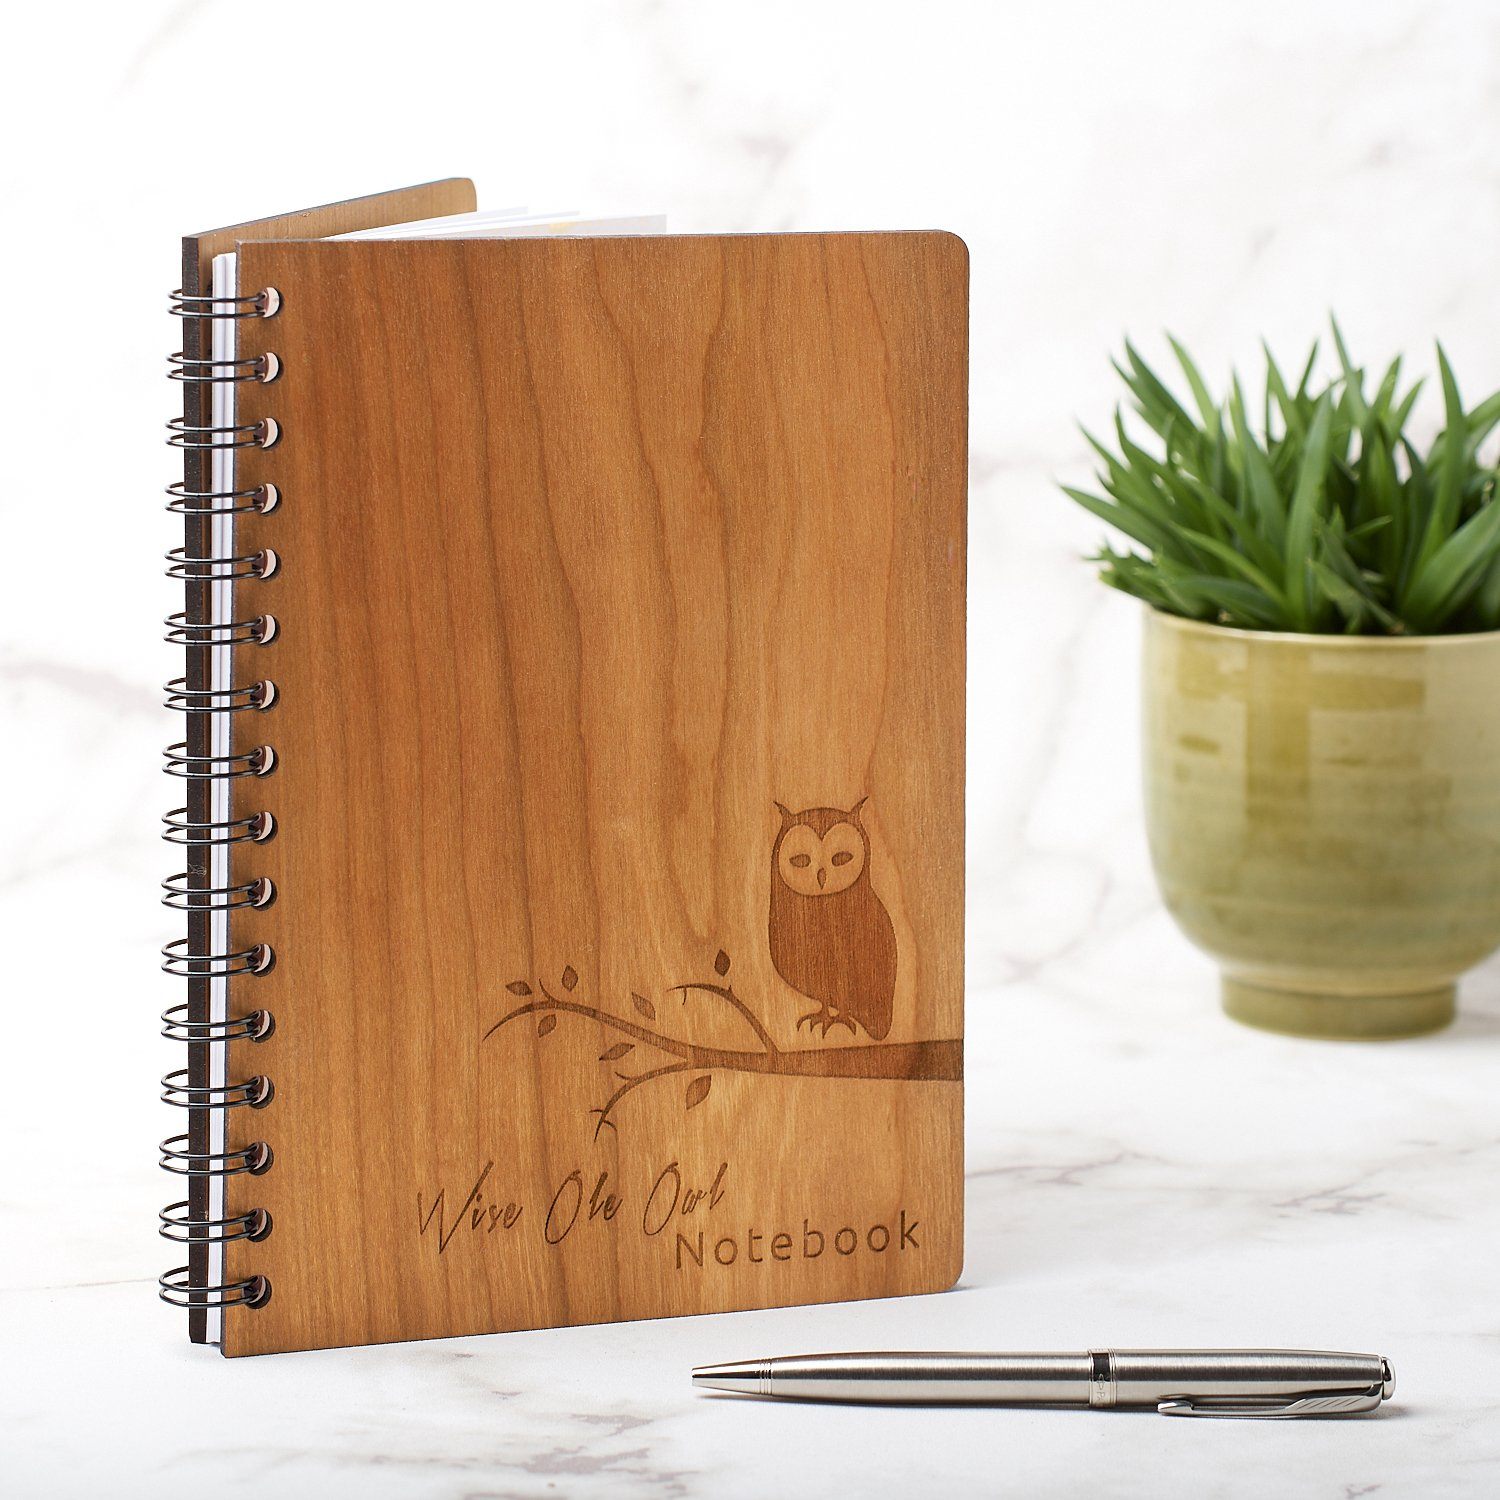 Notebook Planner - A5 Note Book, Journal, Planner - Owl Design